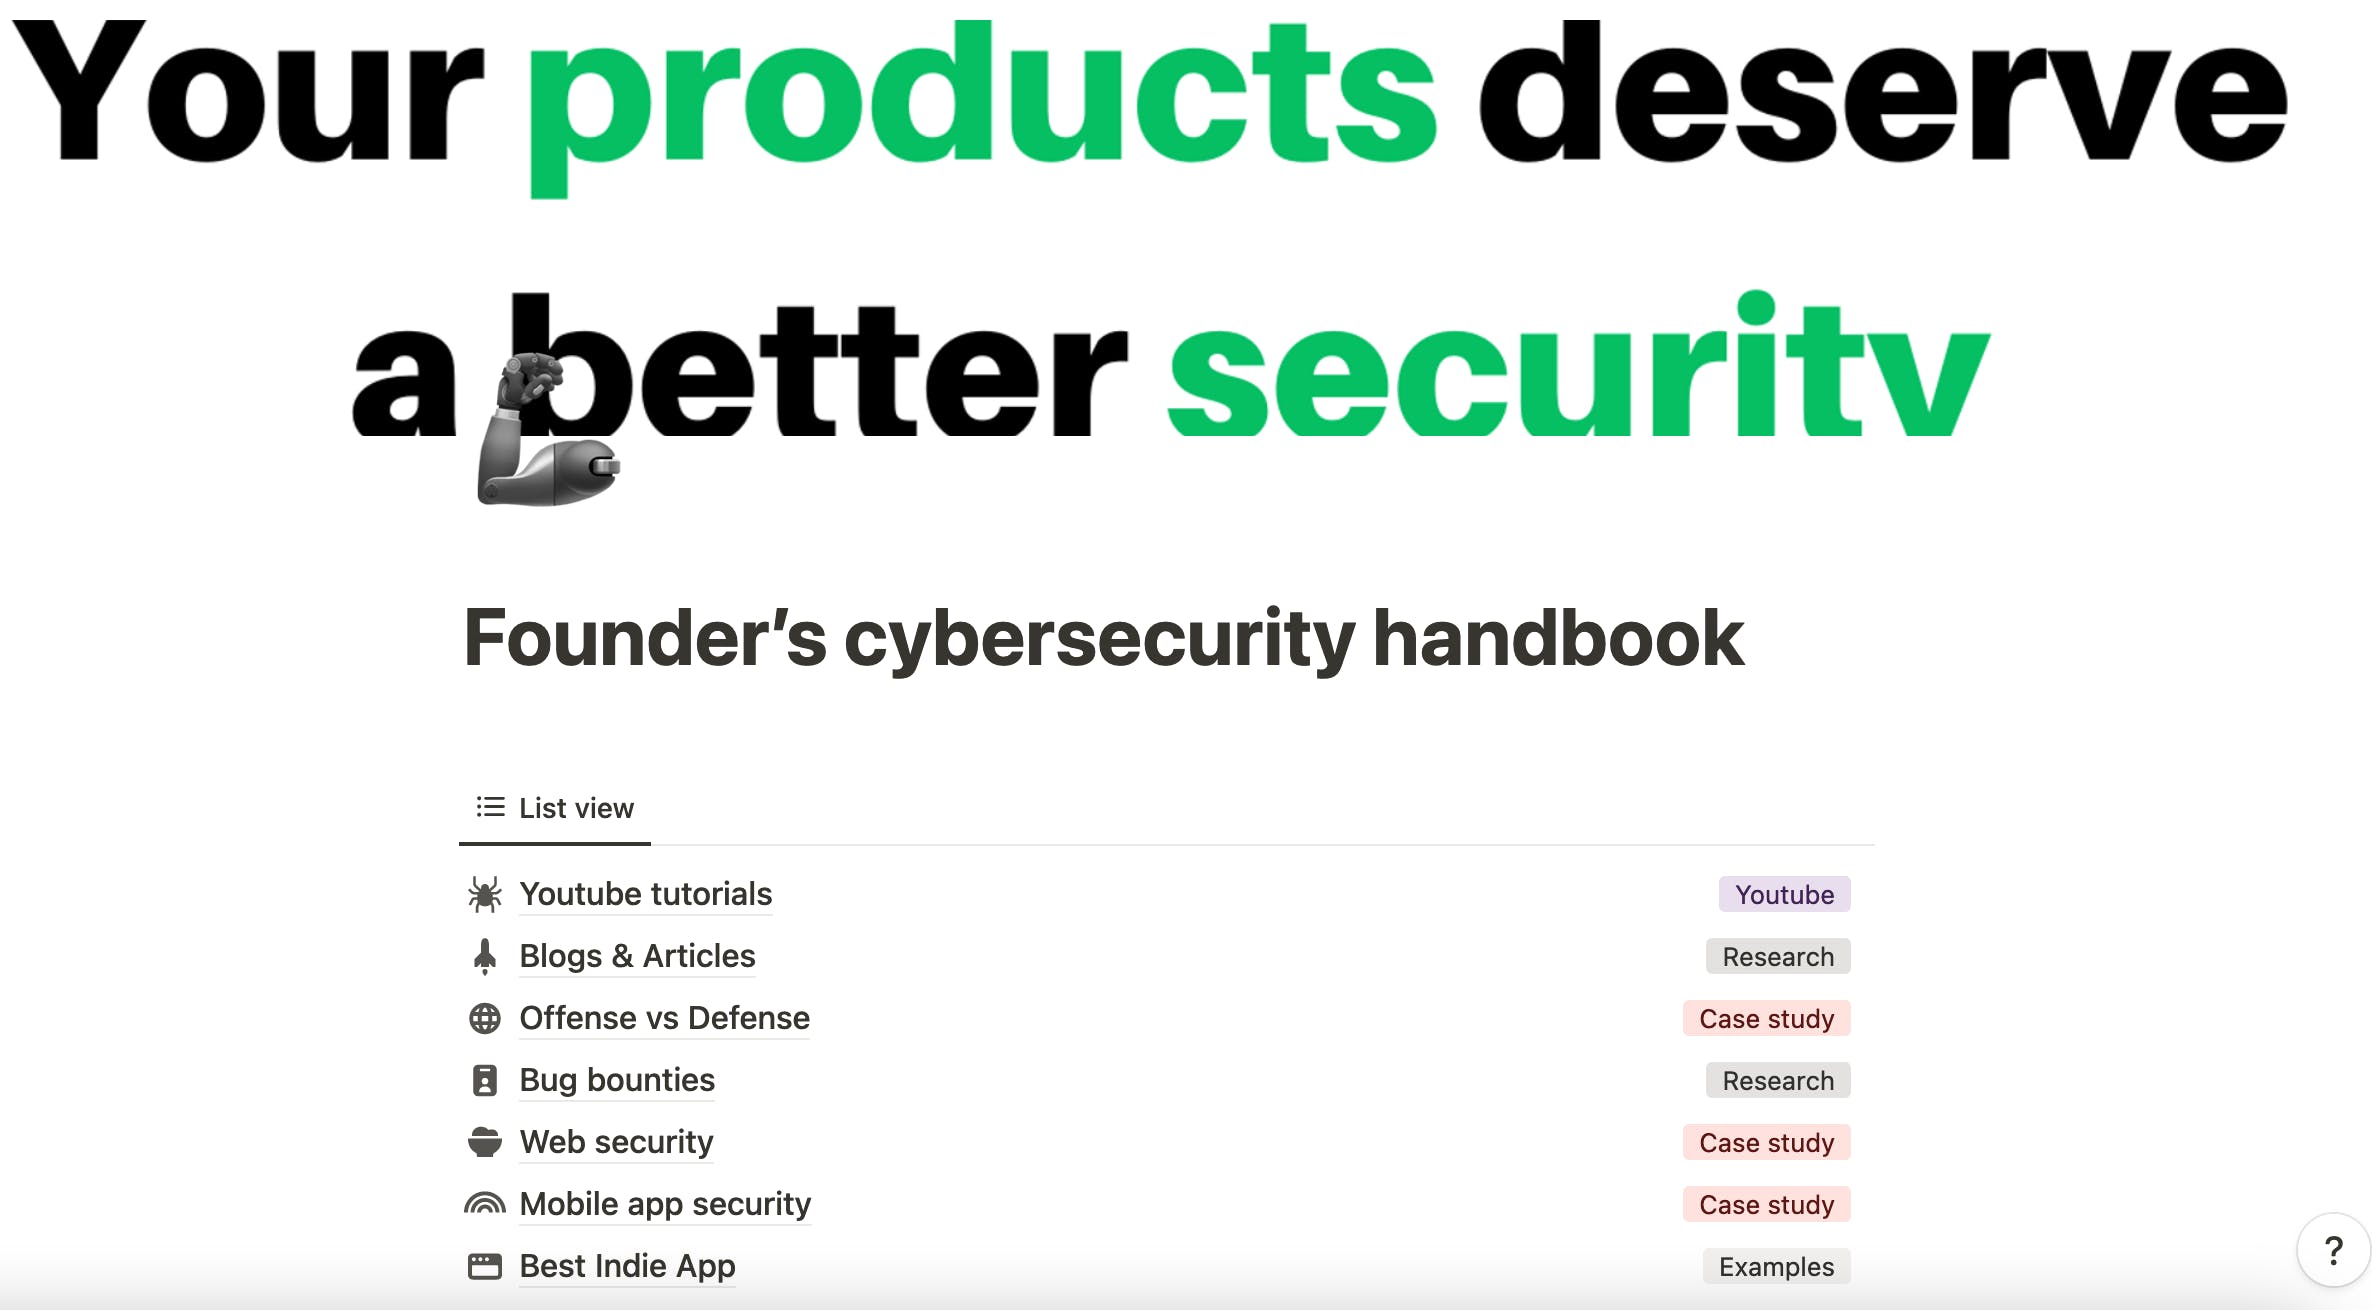 Founder’s cybersecurity handbook media 1